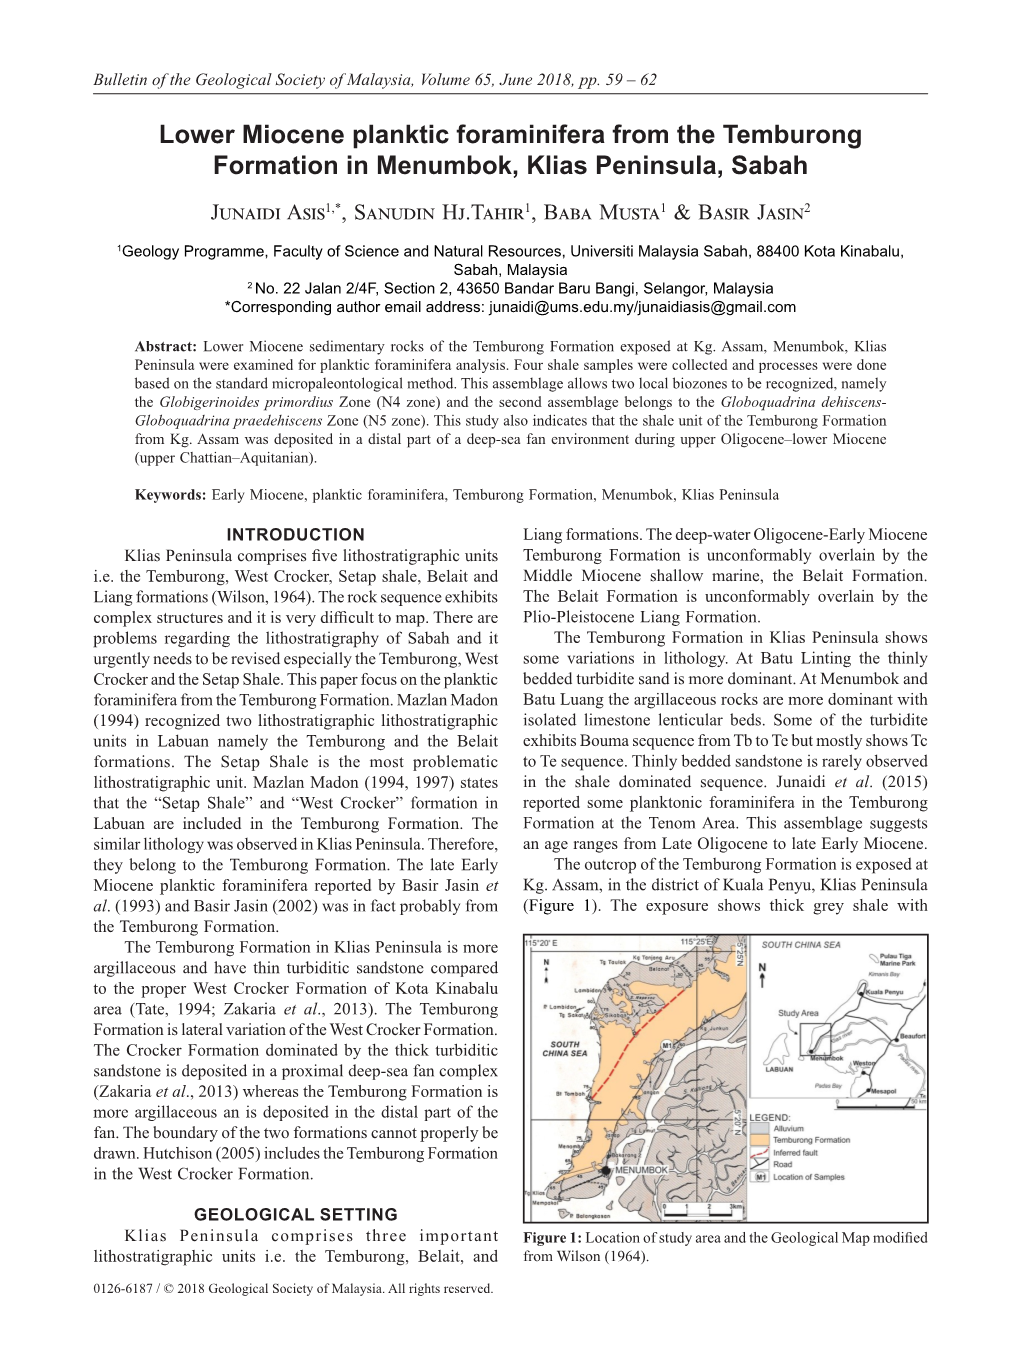 Lower Miocene Planktic Foraminifera from the Temburong Formation in Menumbok, Klias Peninsula, Sabah Junaidi Asis1,*, Sanudin Hj.Tahir1, Baba Musta1 & Basir Jasin2